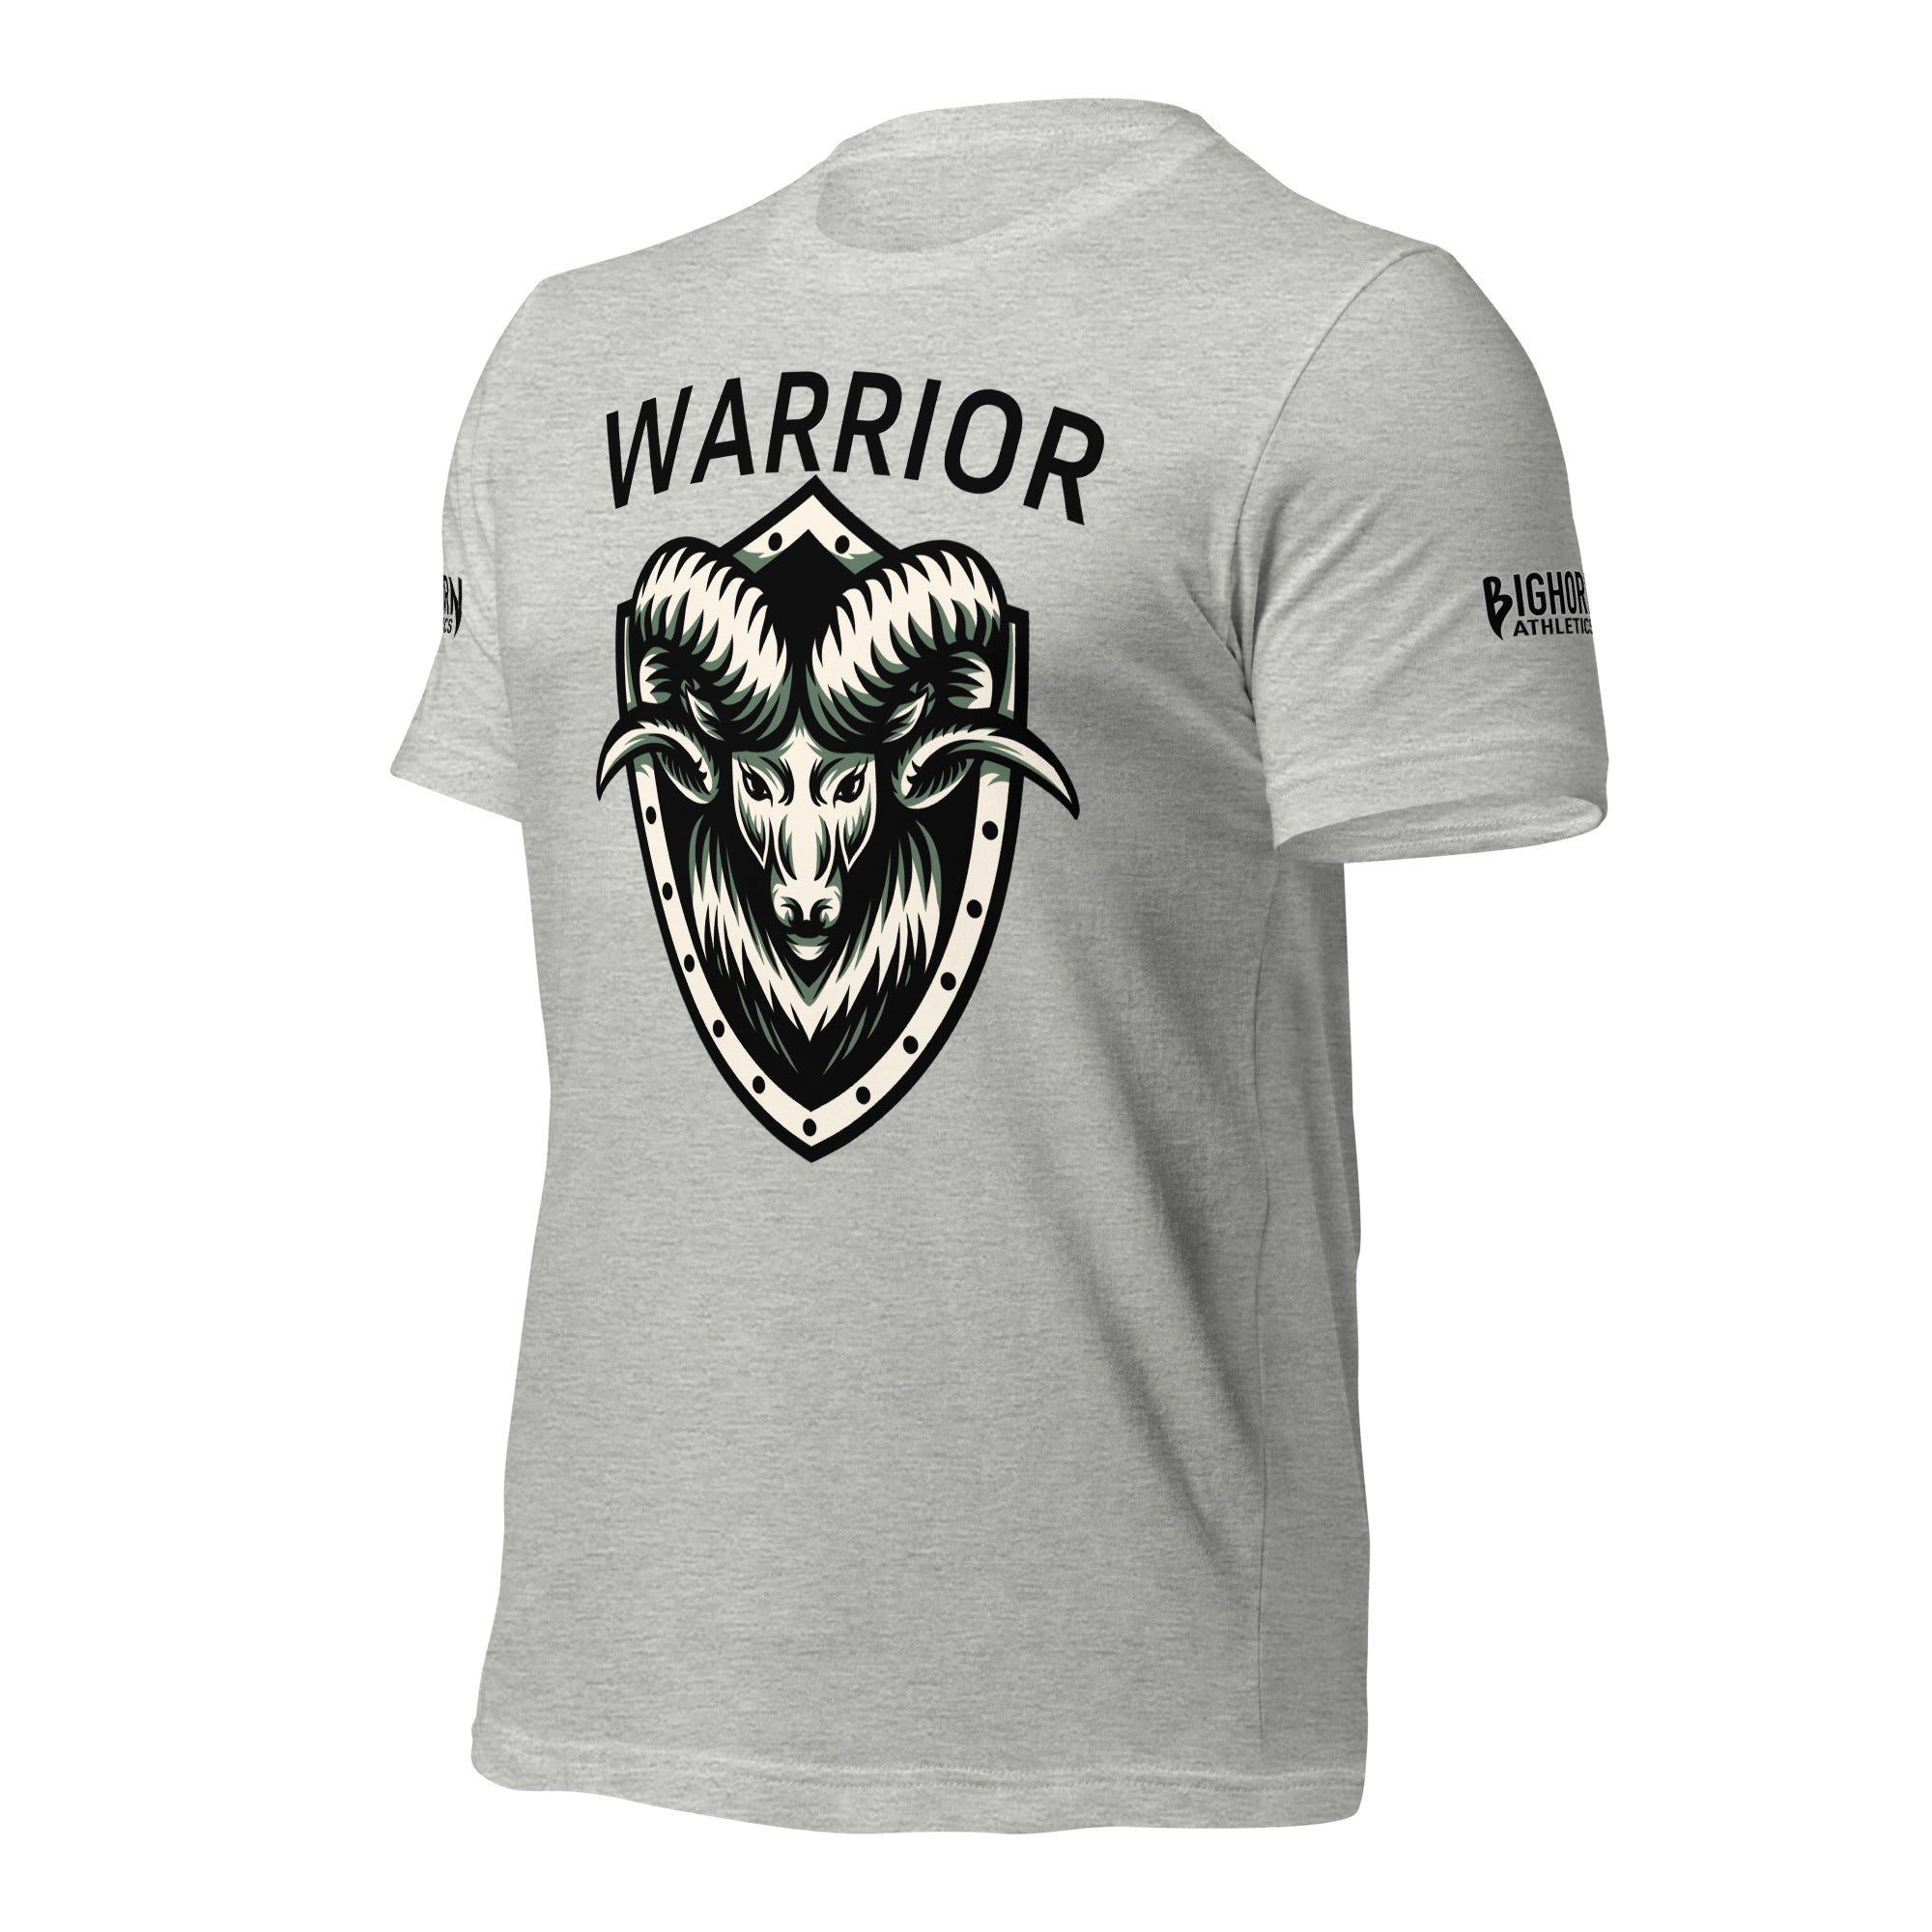 Undoubtedly Warrior T-Shirt, Pre-Shrunk